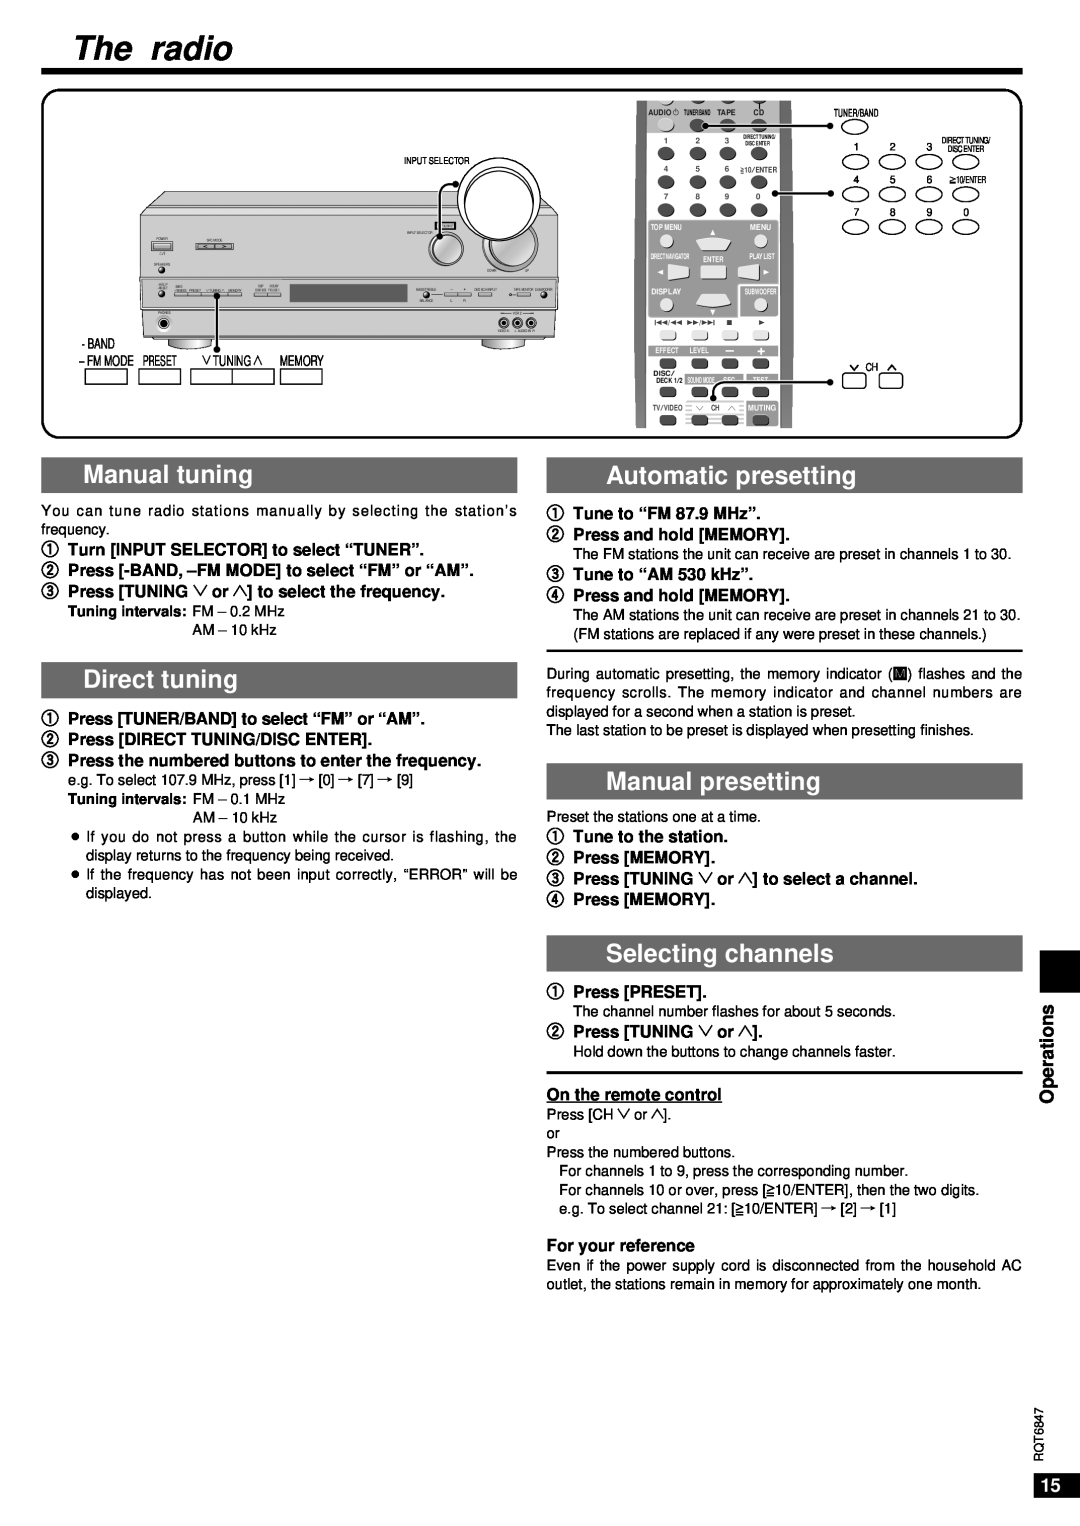 Panasonic SA-HE75 The radio, Manual tuning, Direct tuning, Automatic presetting, Manual presetting, Selecting channels 